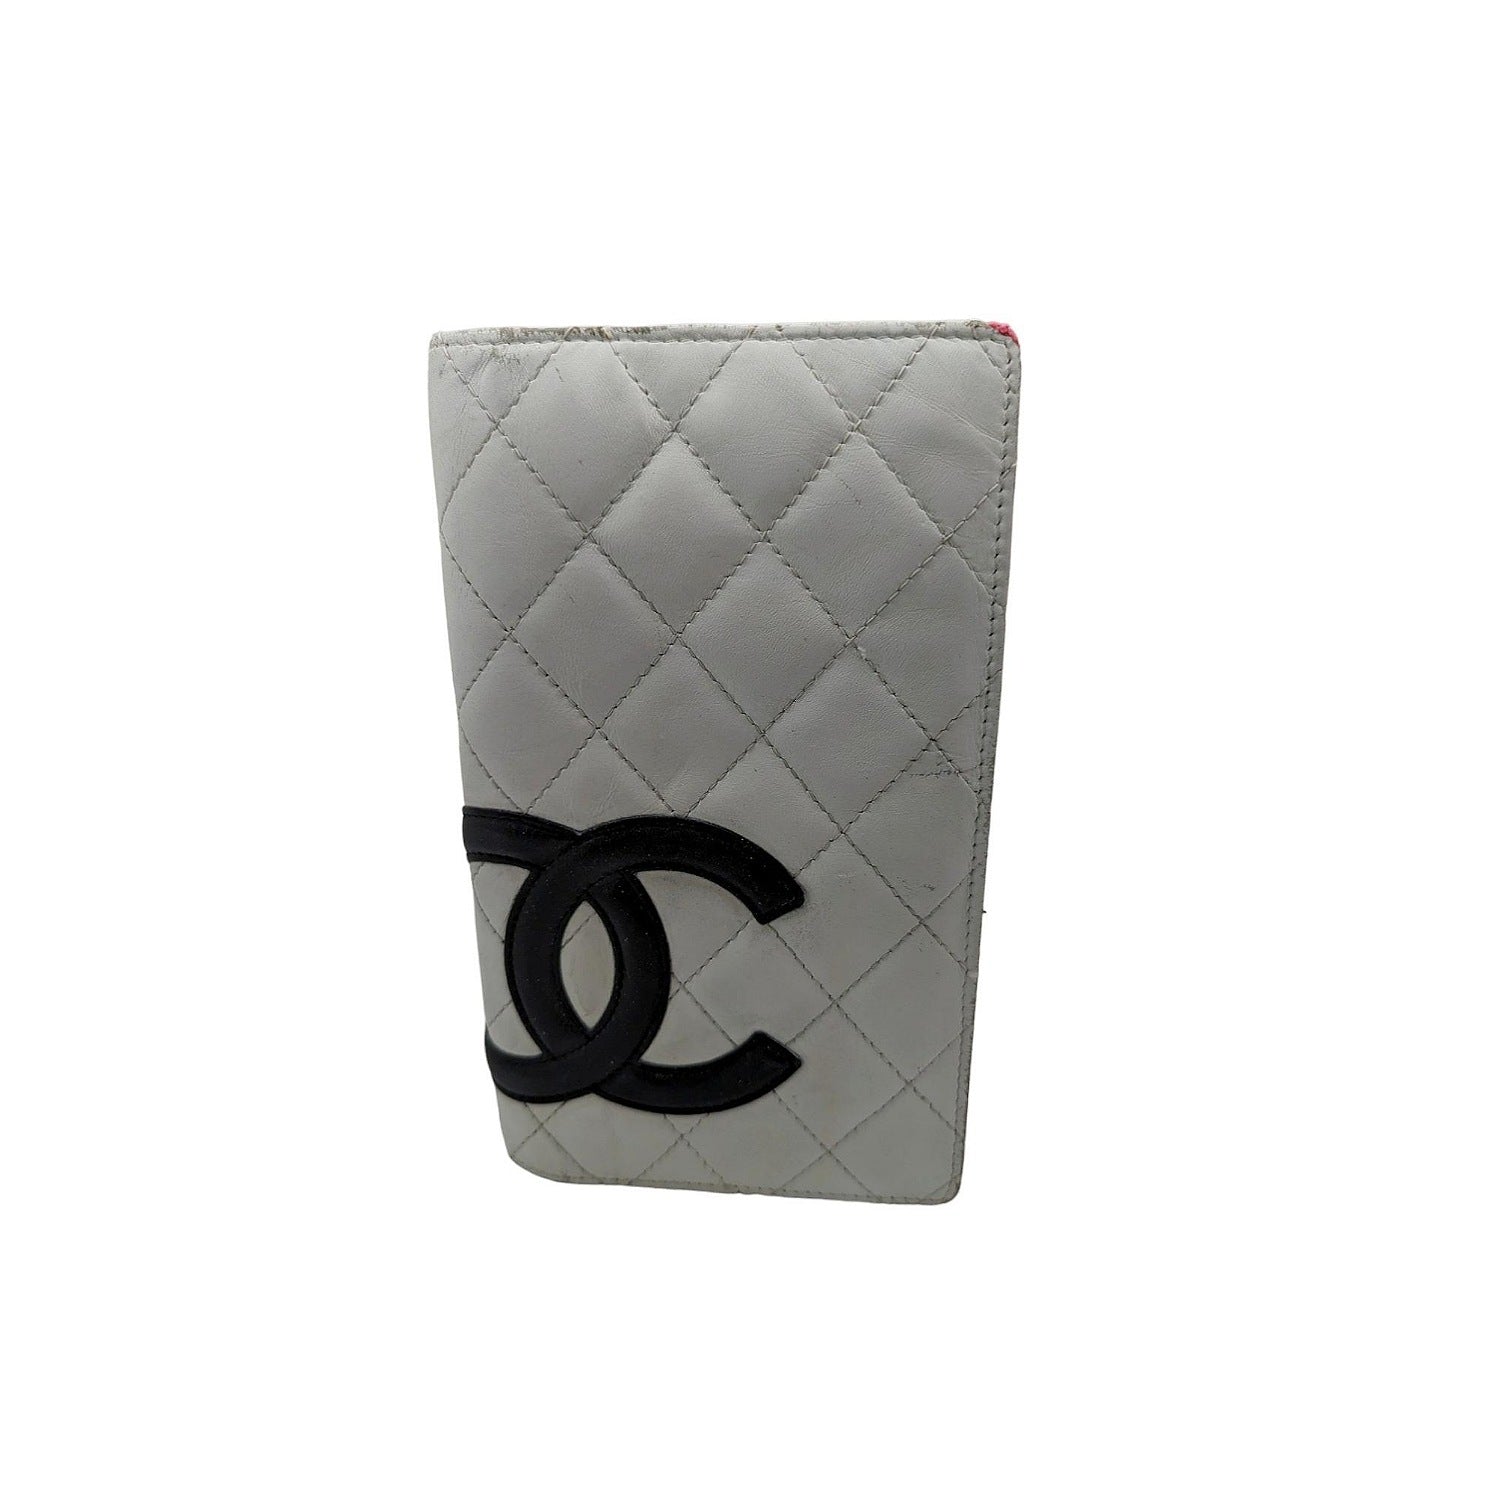 Chanel White Caviar Leather CC Logo Zip Around Wallet Continental